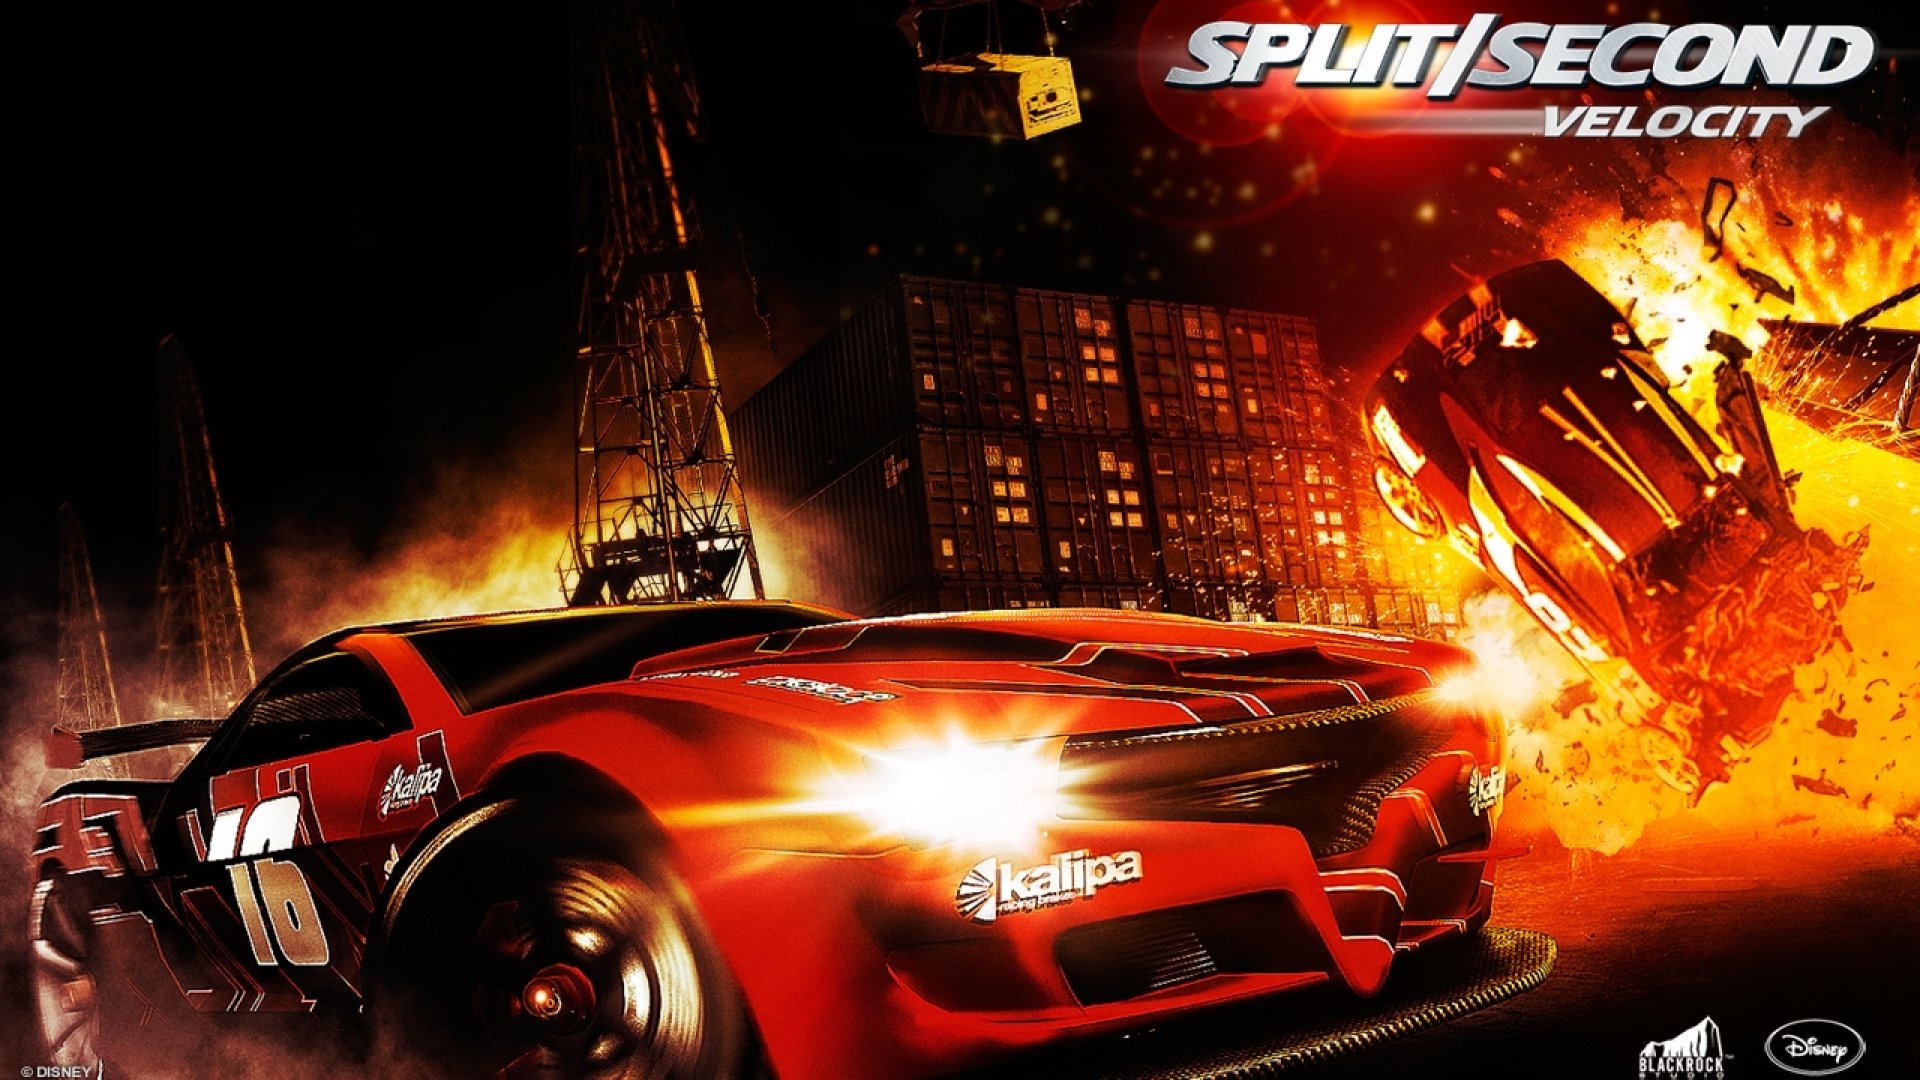 split, Second, Action, Racing, Race, Video, Game, Arcade, Splitsecond, Velocity, Disney, Poster Wallpaper